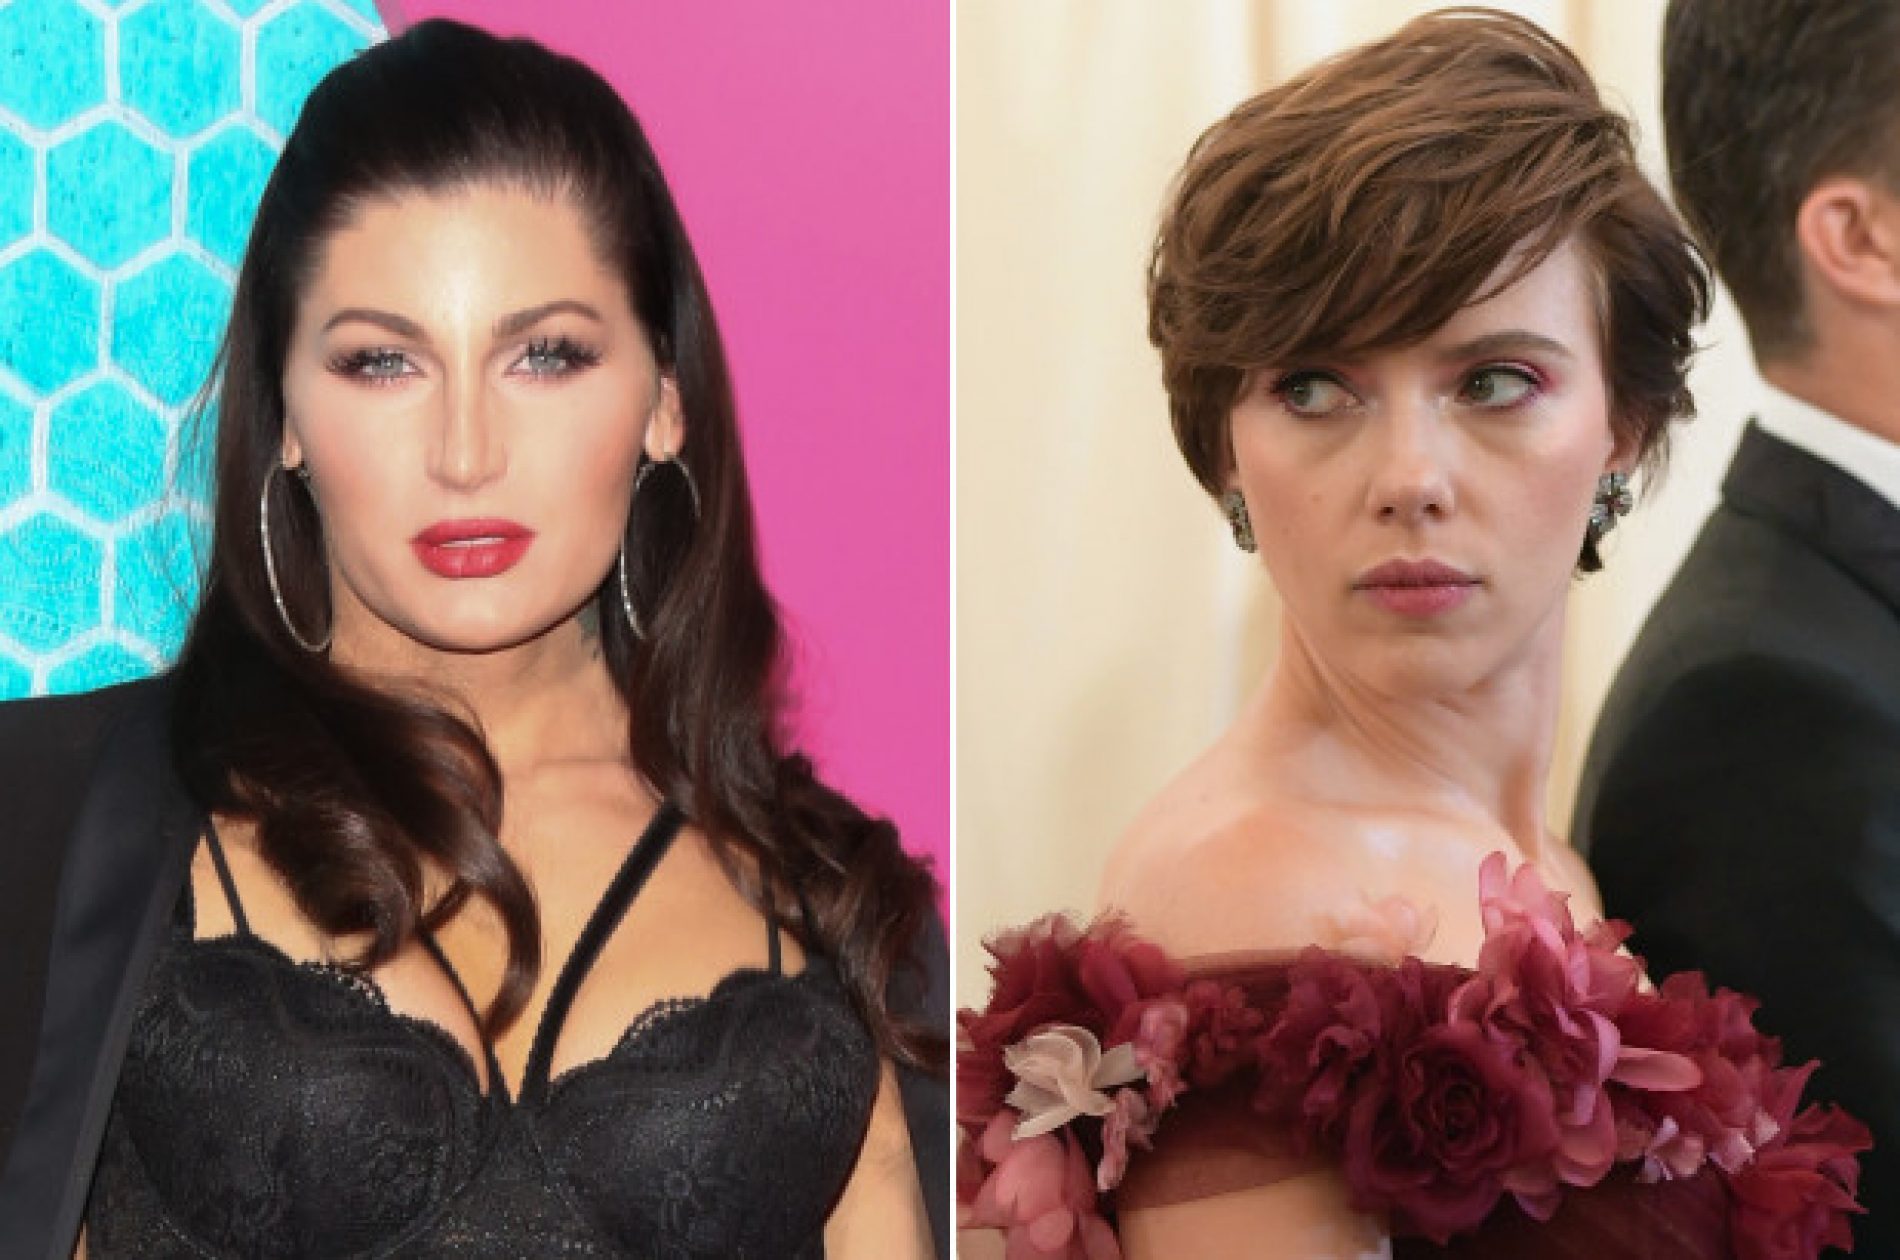 Actress Trace Lysette slams Scarlett Johansson for taking transgender role, gets death threats in return